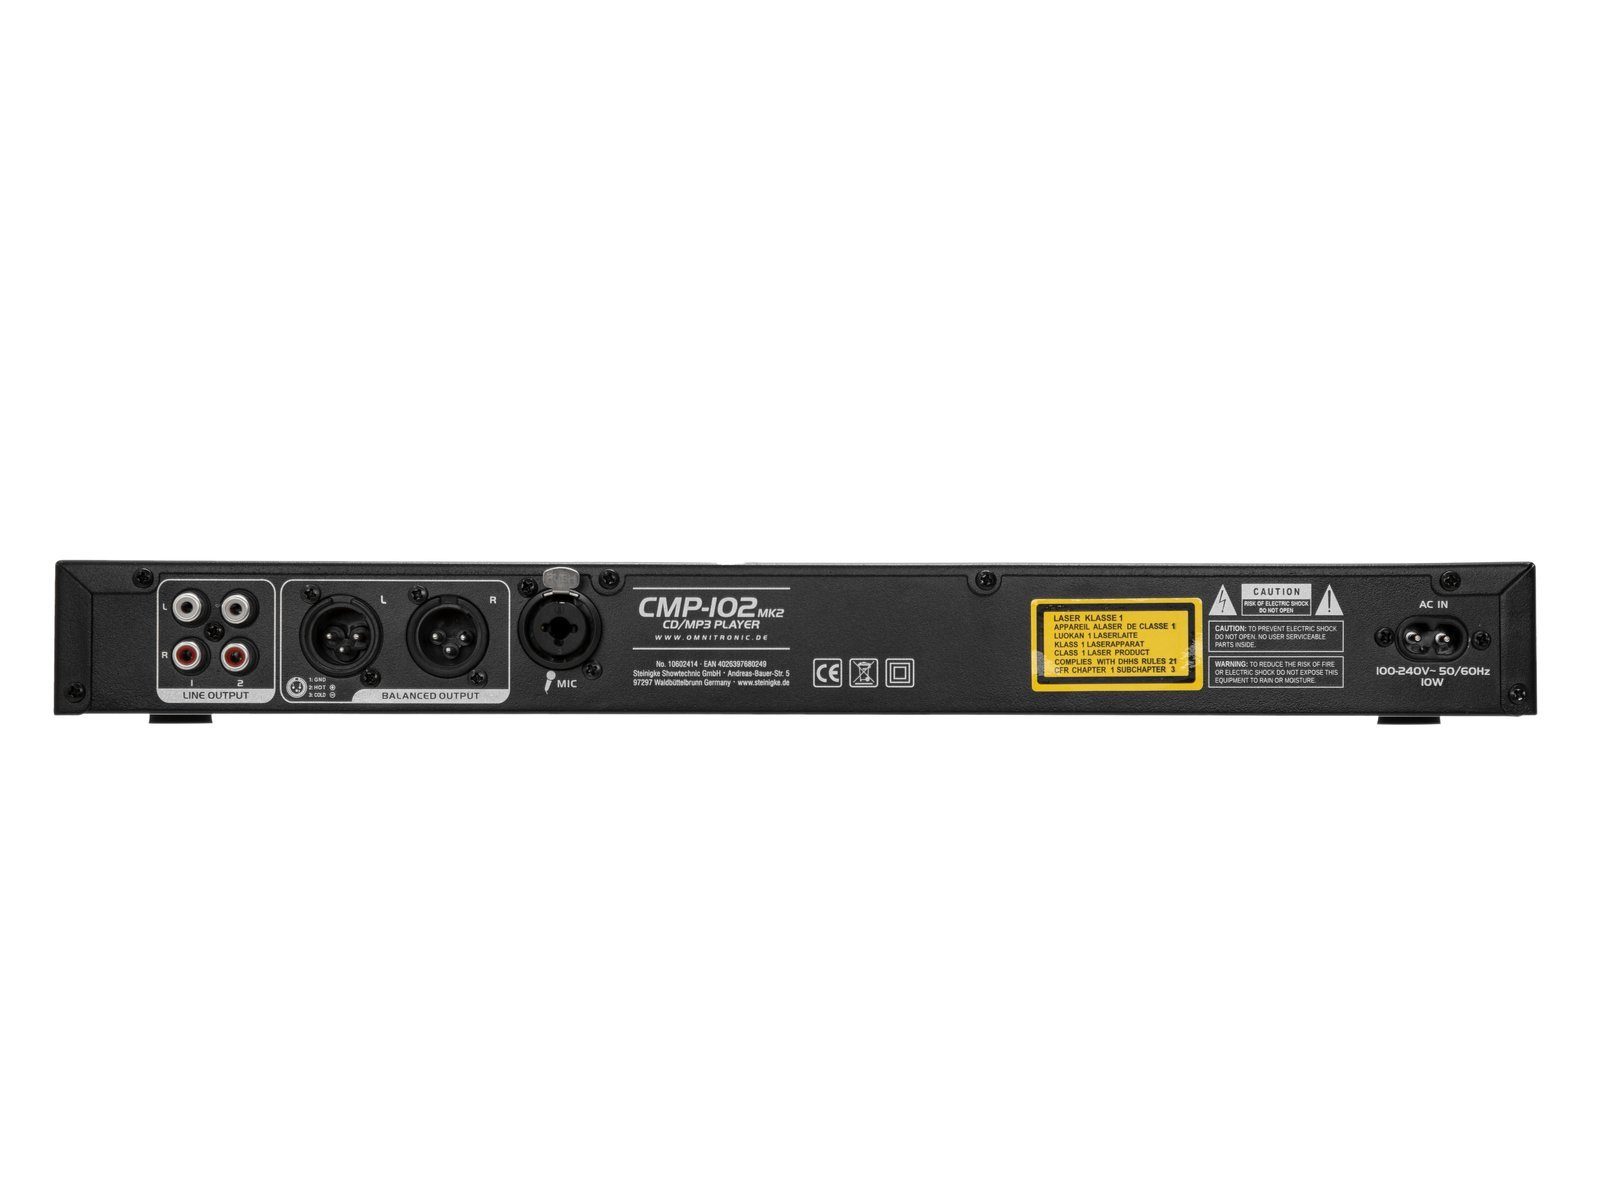 Omnitronic CMP-102 MK2 CD-/MP3-Player Player HE Stereo-CD (1 Einbauversion)